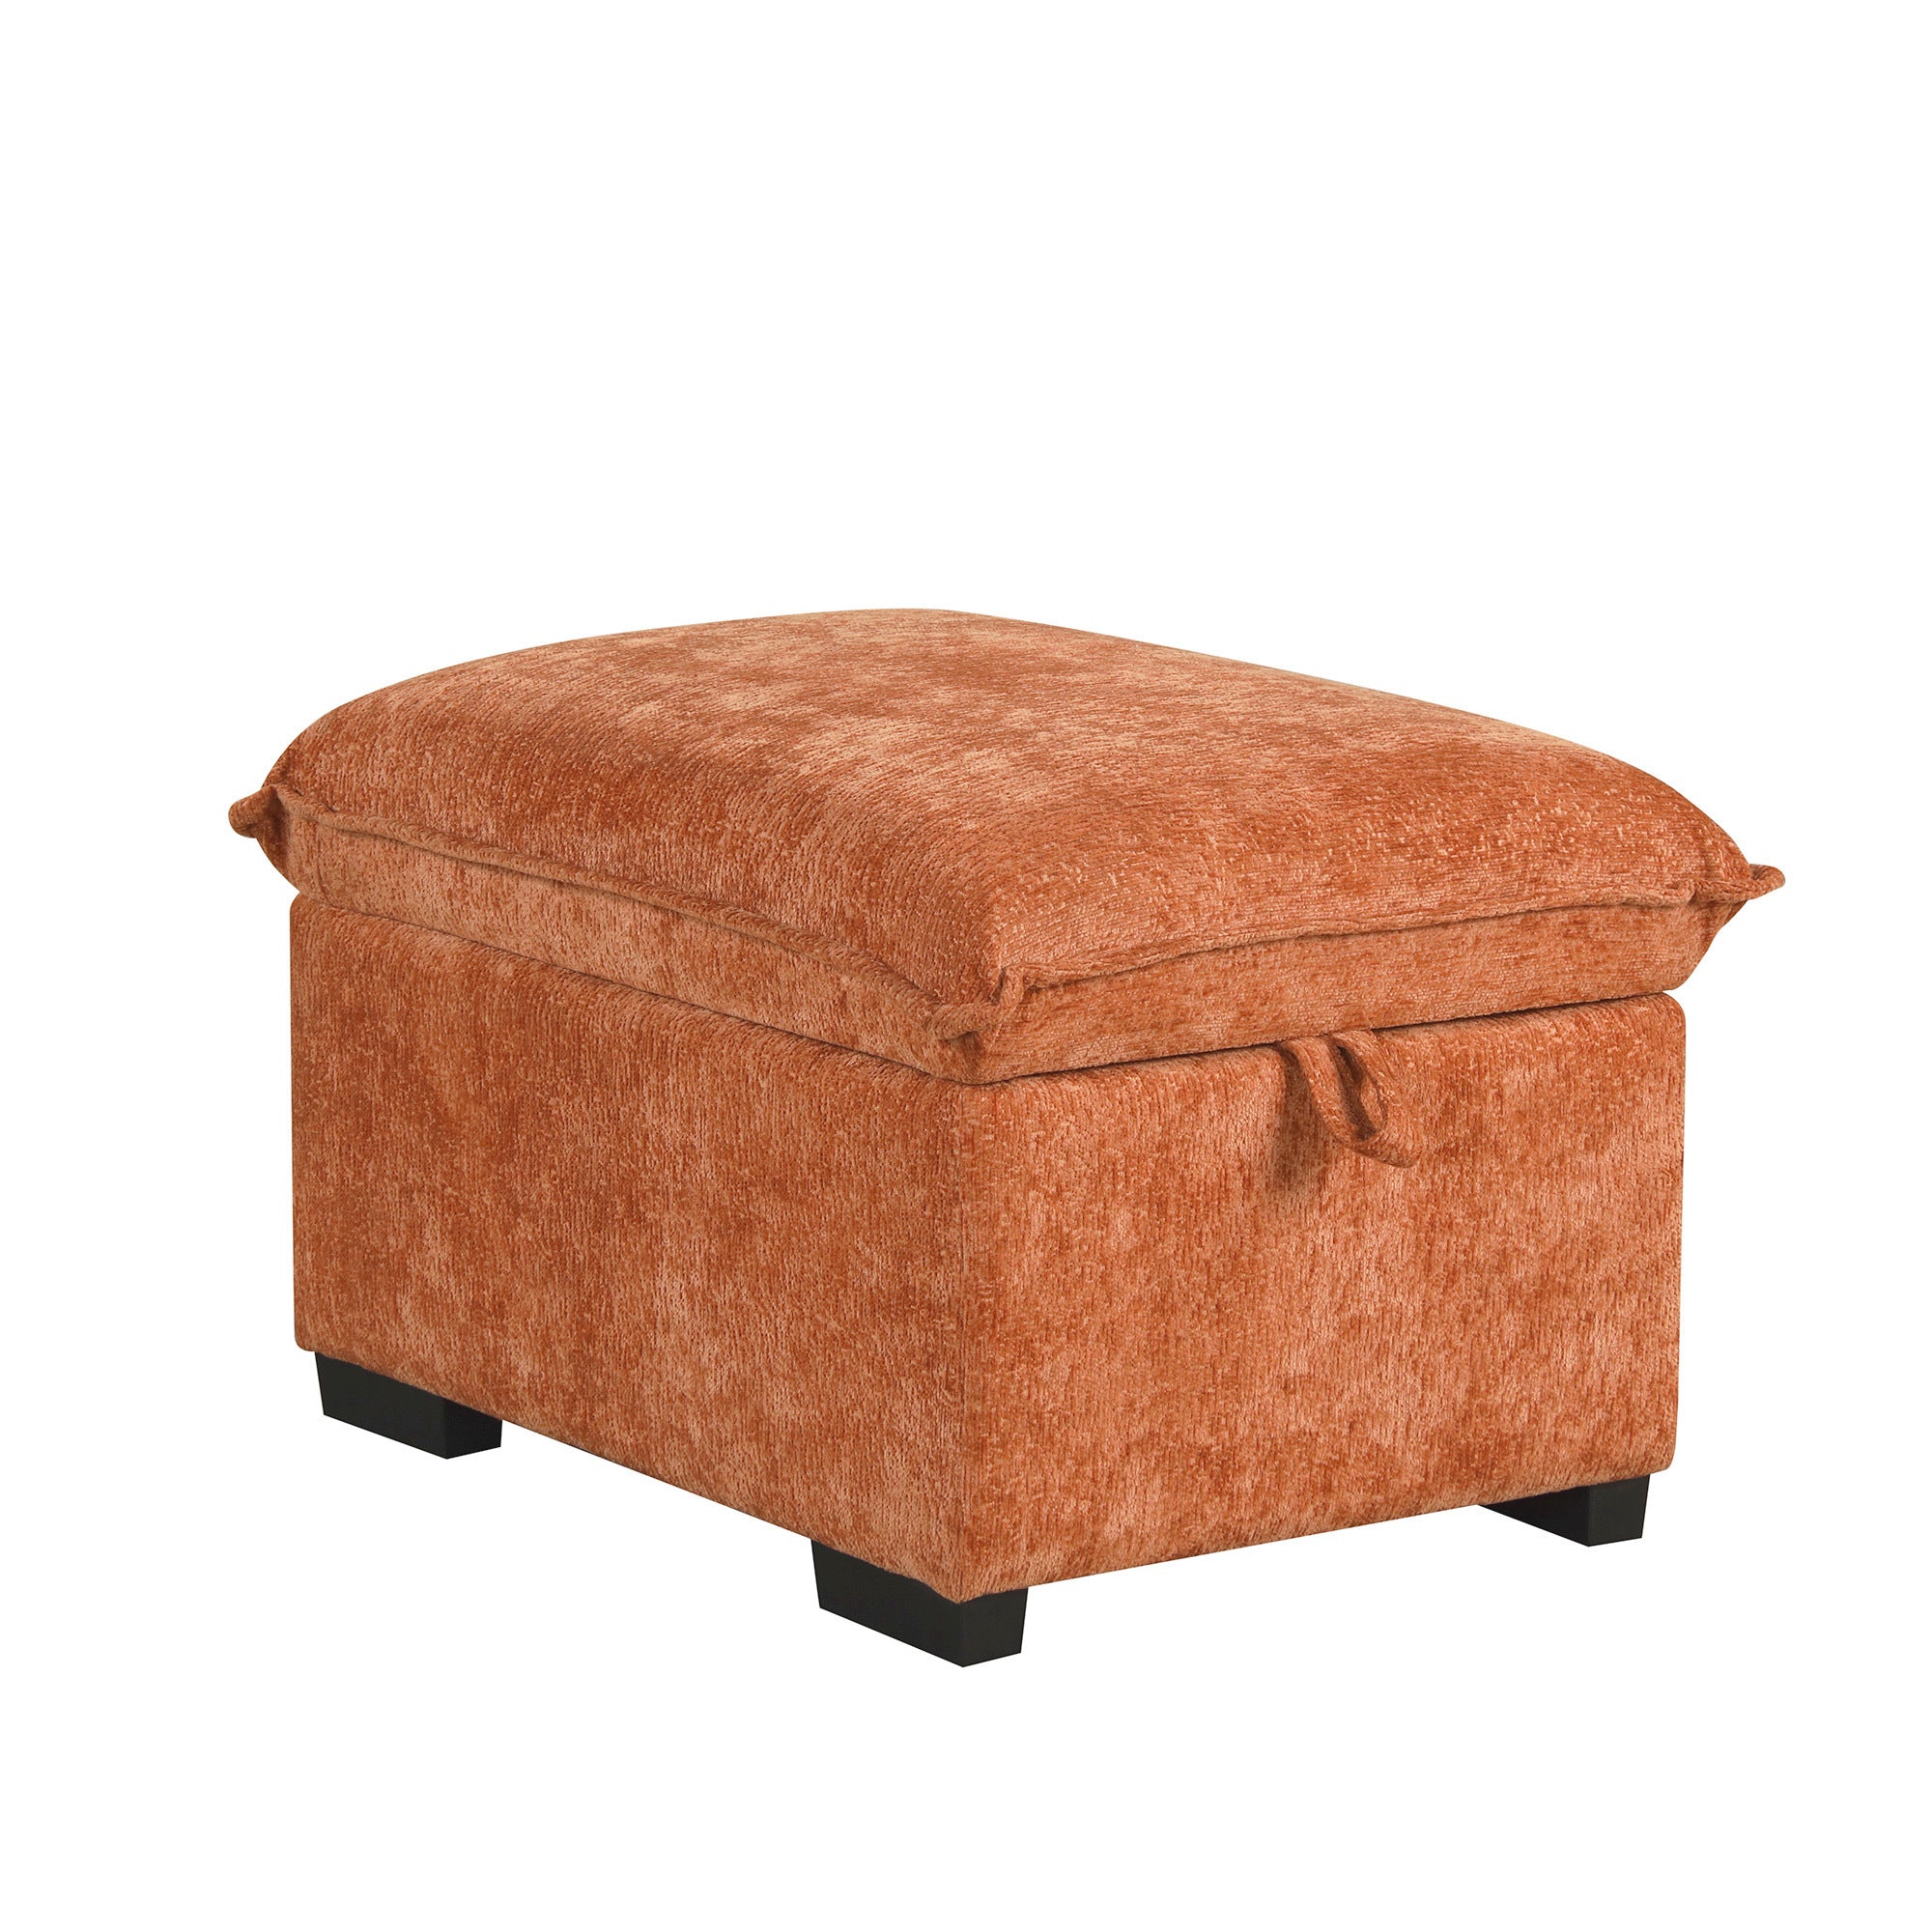 Orange L-Shaped Sectional Sofa Bed w/ Storage Ottoman